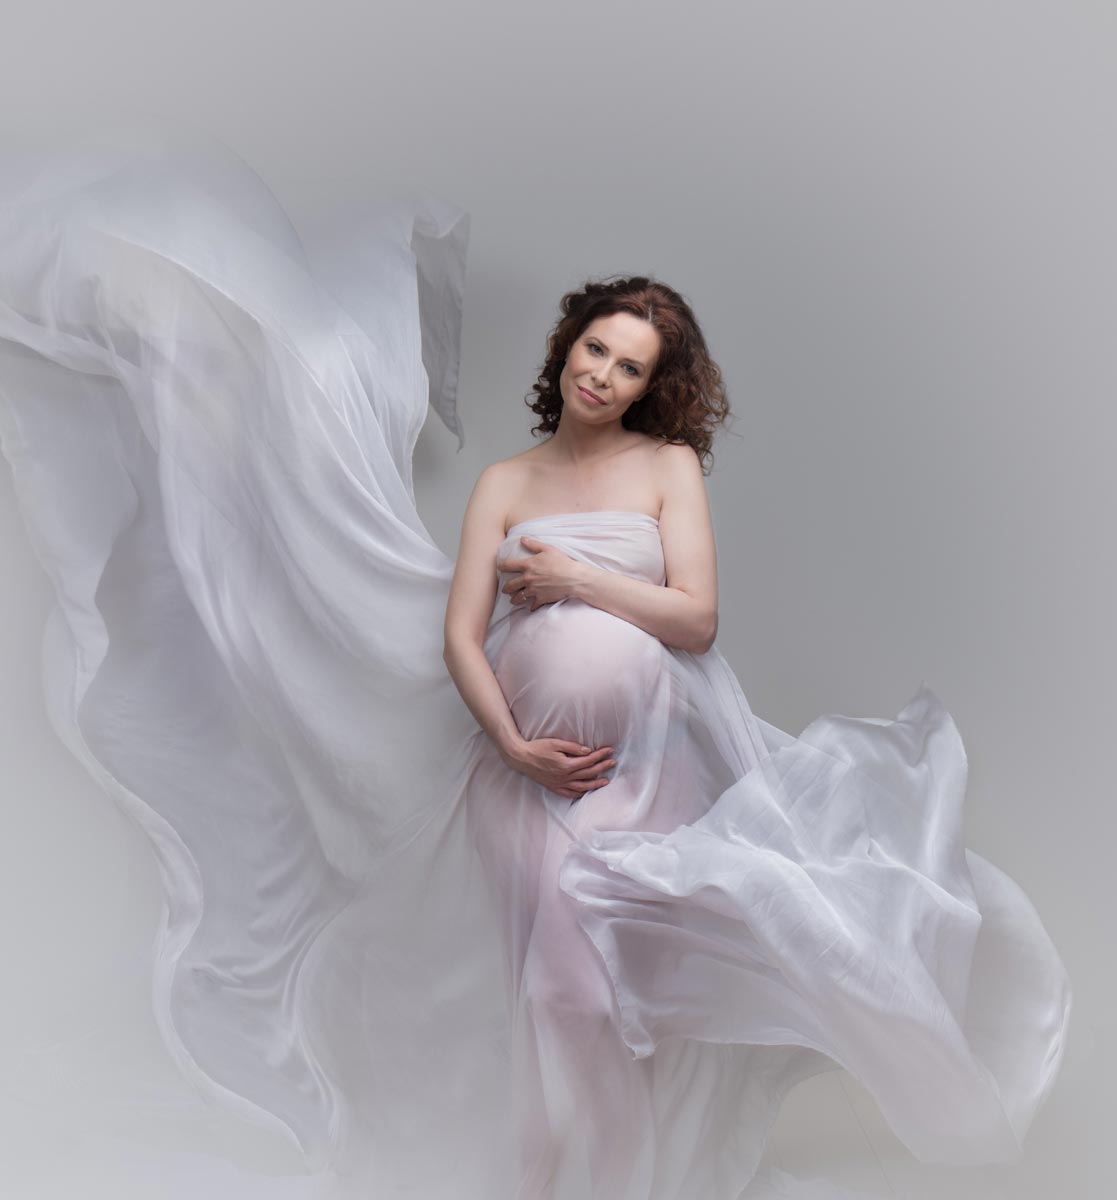 Family Studio Maternity Photography Poses & Ideas - Milk bath maternity  photos NYC NJ Artistic newborn baby photographer